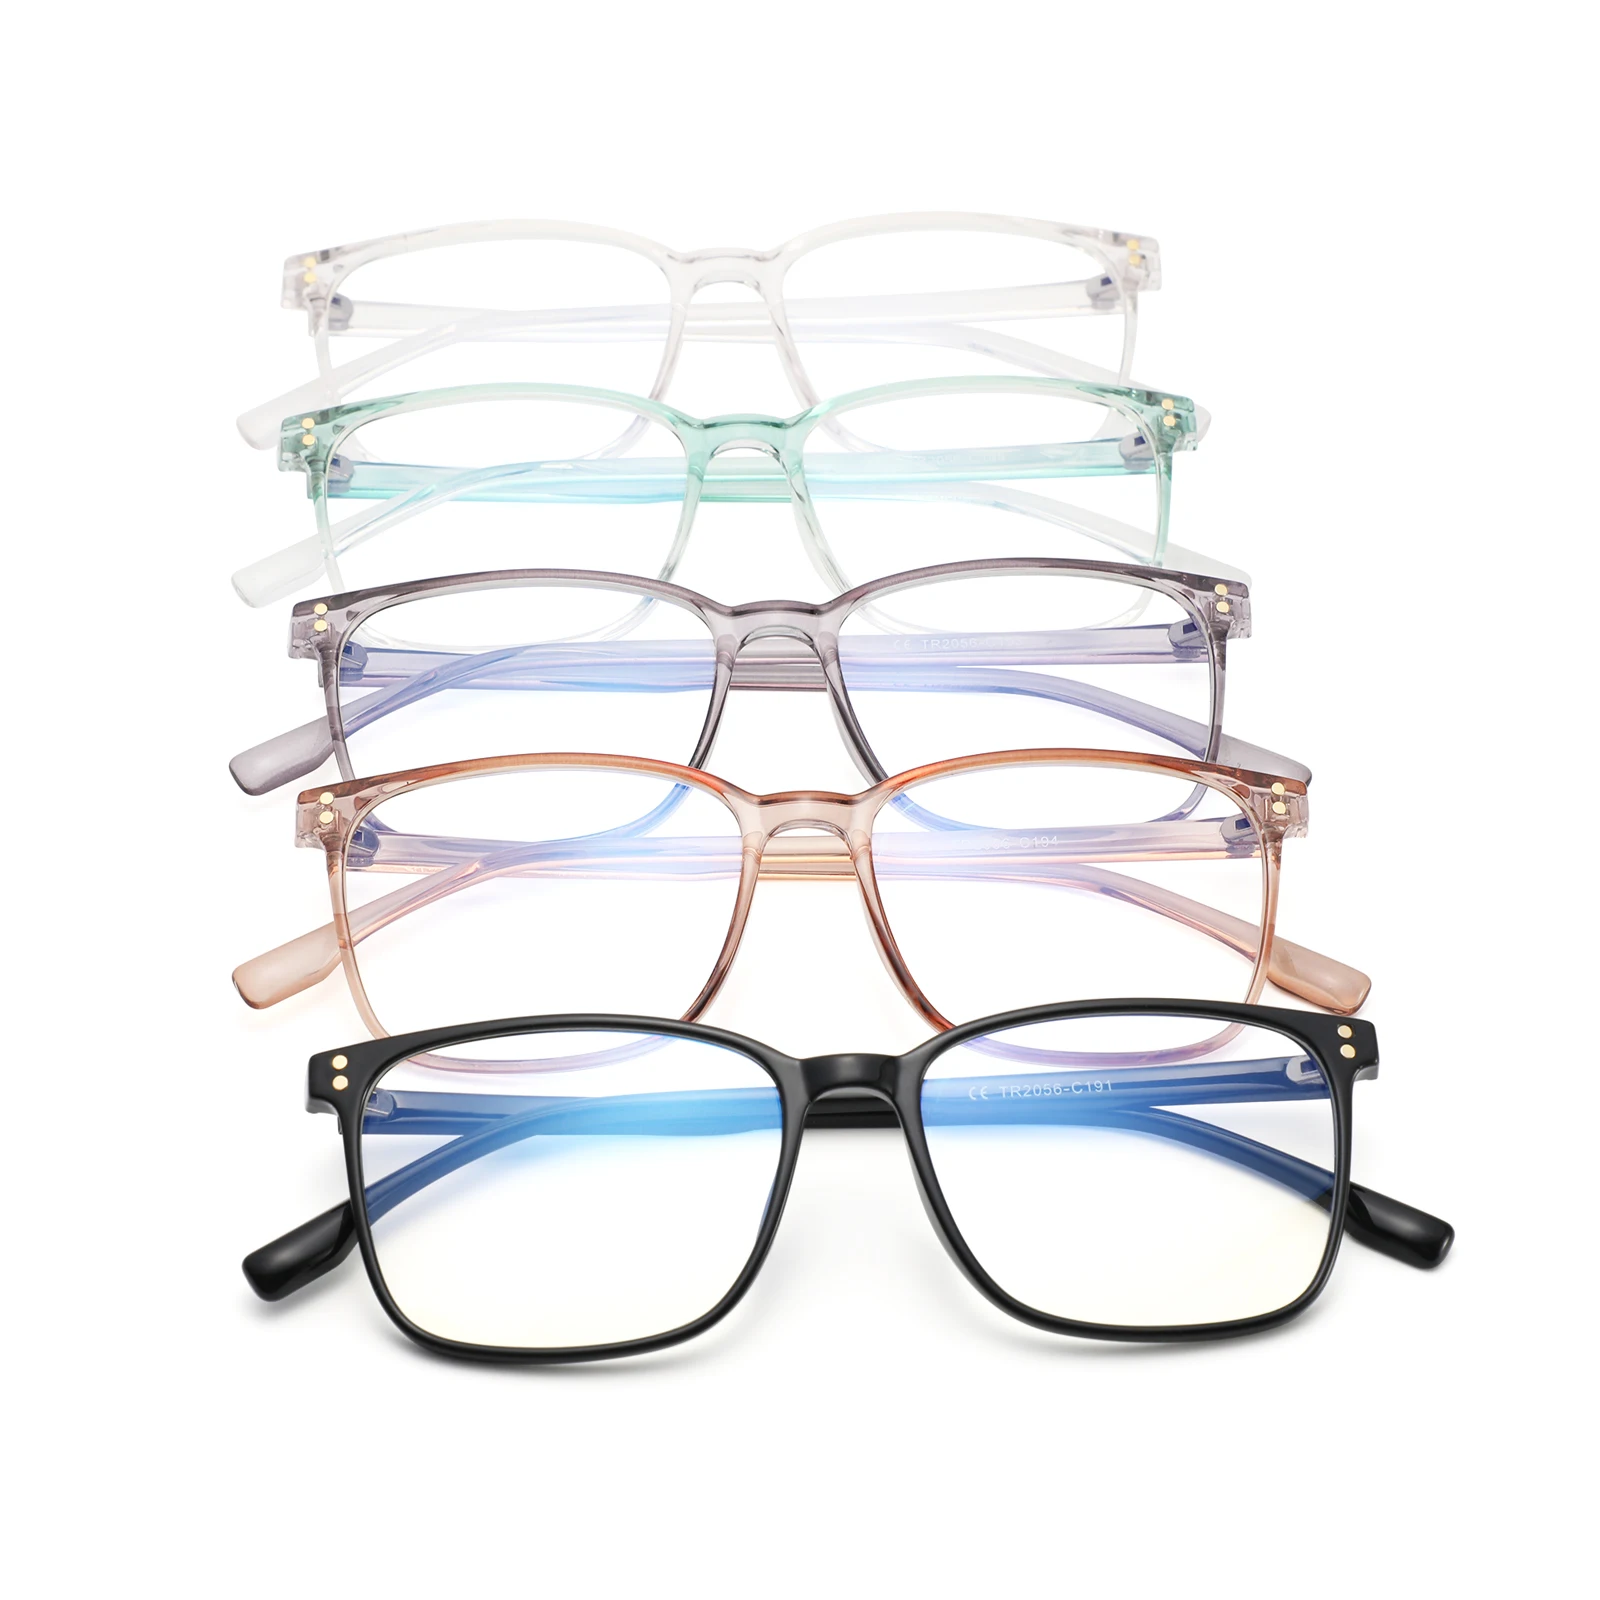 

2021 New Arrival Blue Light Blocking Glasses TR90 Lightweight Eyeglasses Frame Filter anti Blue Ray Computer Game Glasses